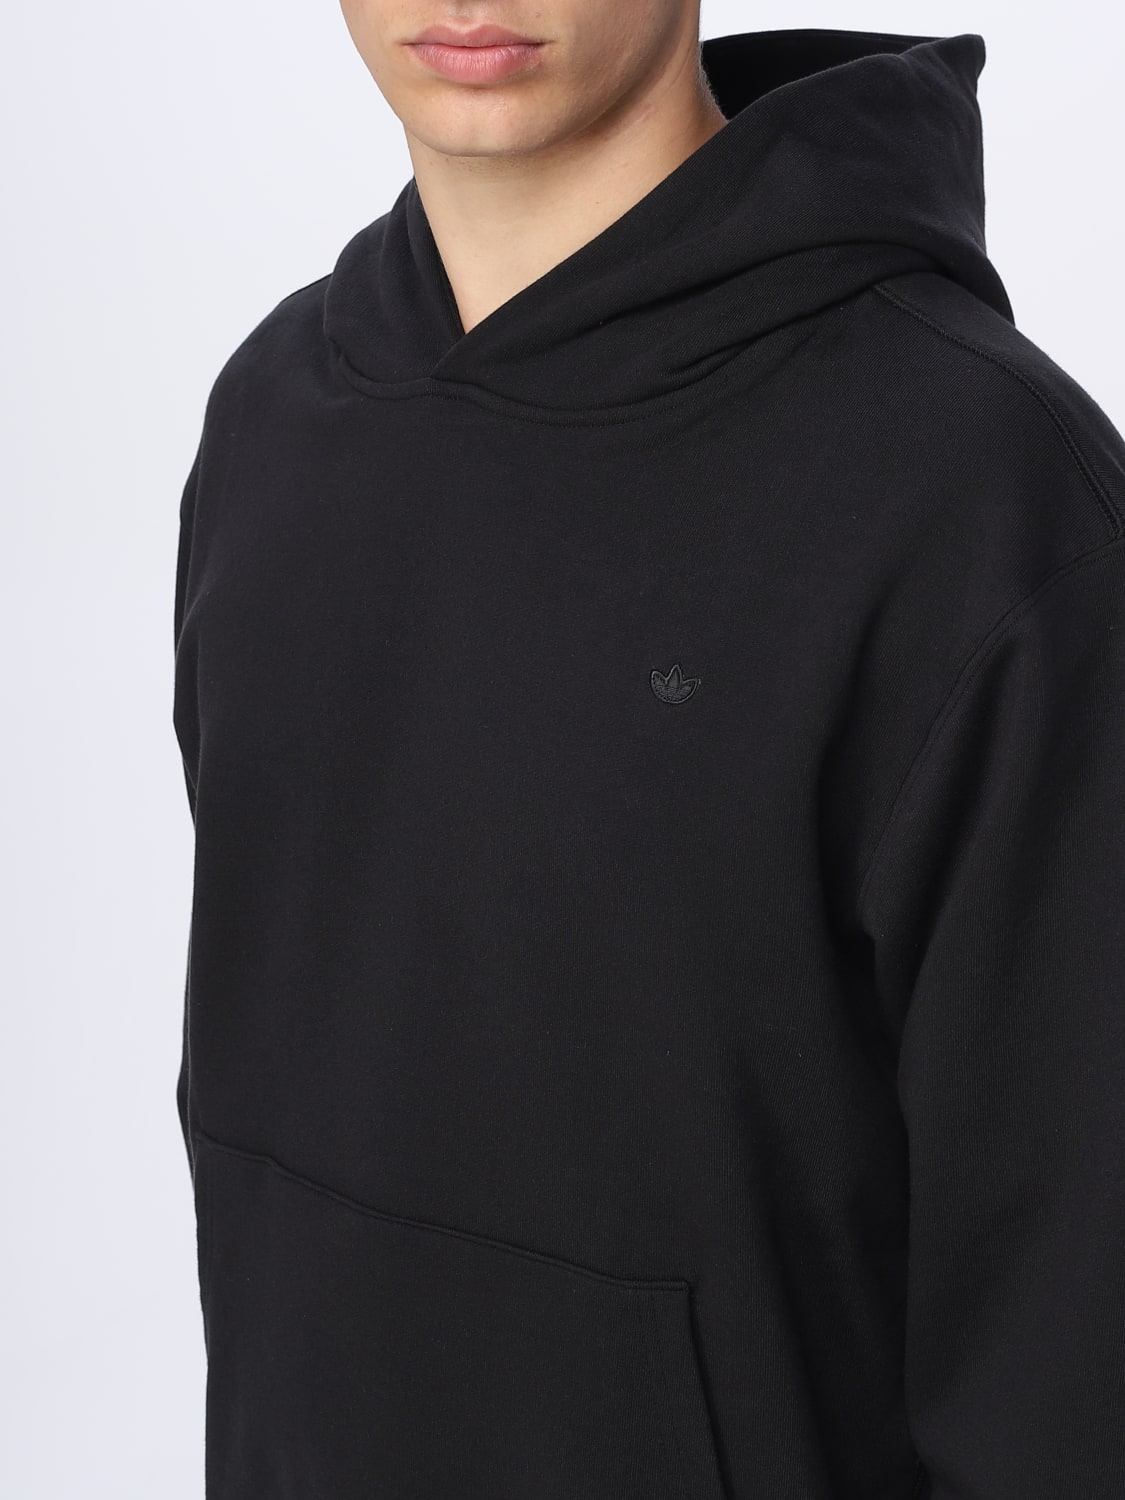 ADIDAS ORIGINALS: sweatshirt in cotton - Black | Adidas Originals sweatshirt  HK2937 online at